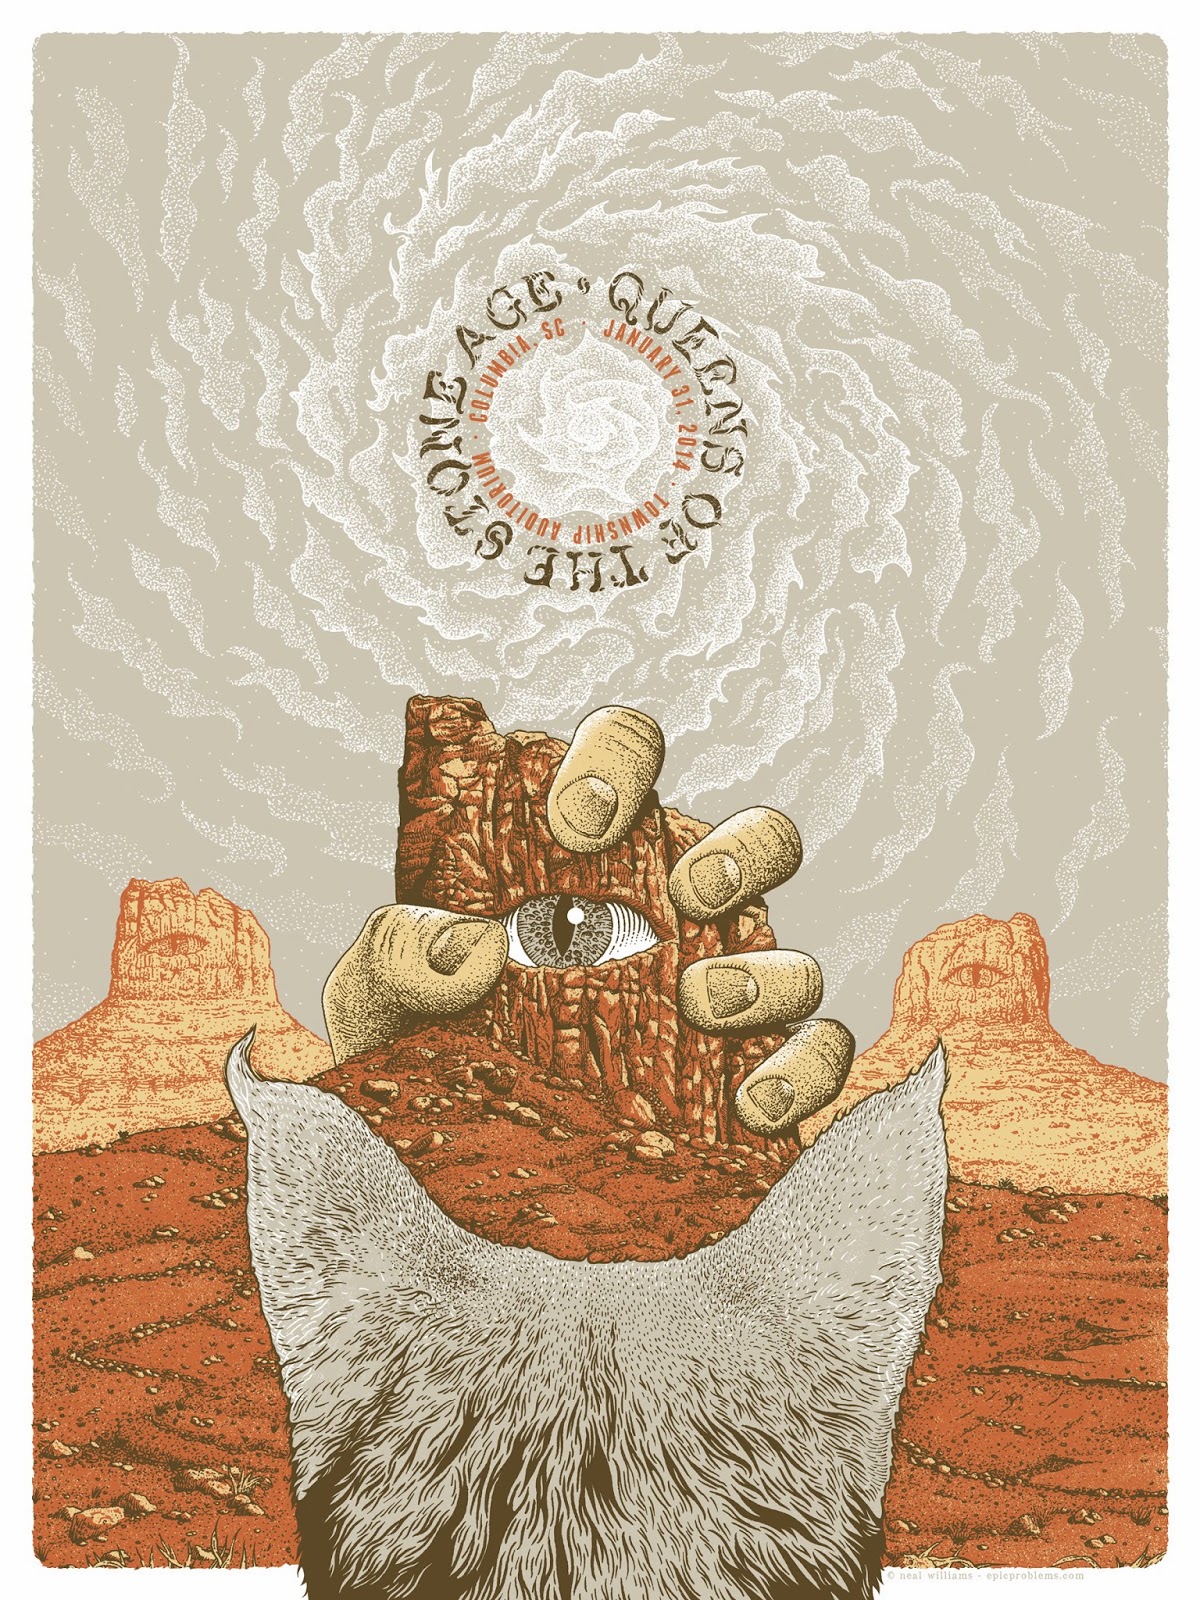 INSIDE THE ROCK POSTER FRAME BLOG: Queens of the Stone Age ...
 Queens Of The Stone Age Poster 2014